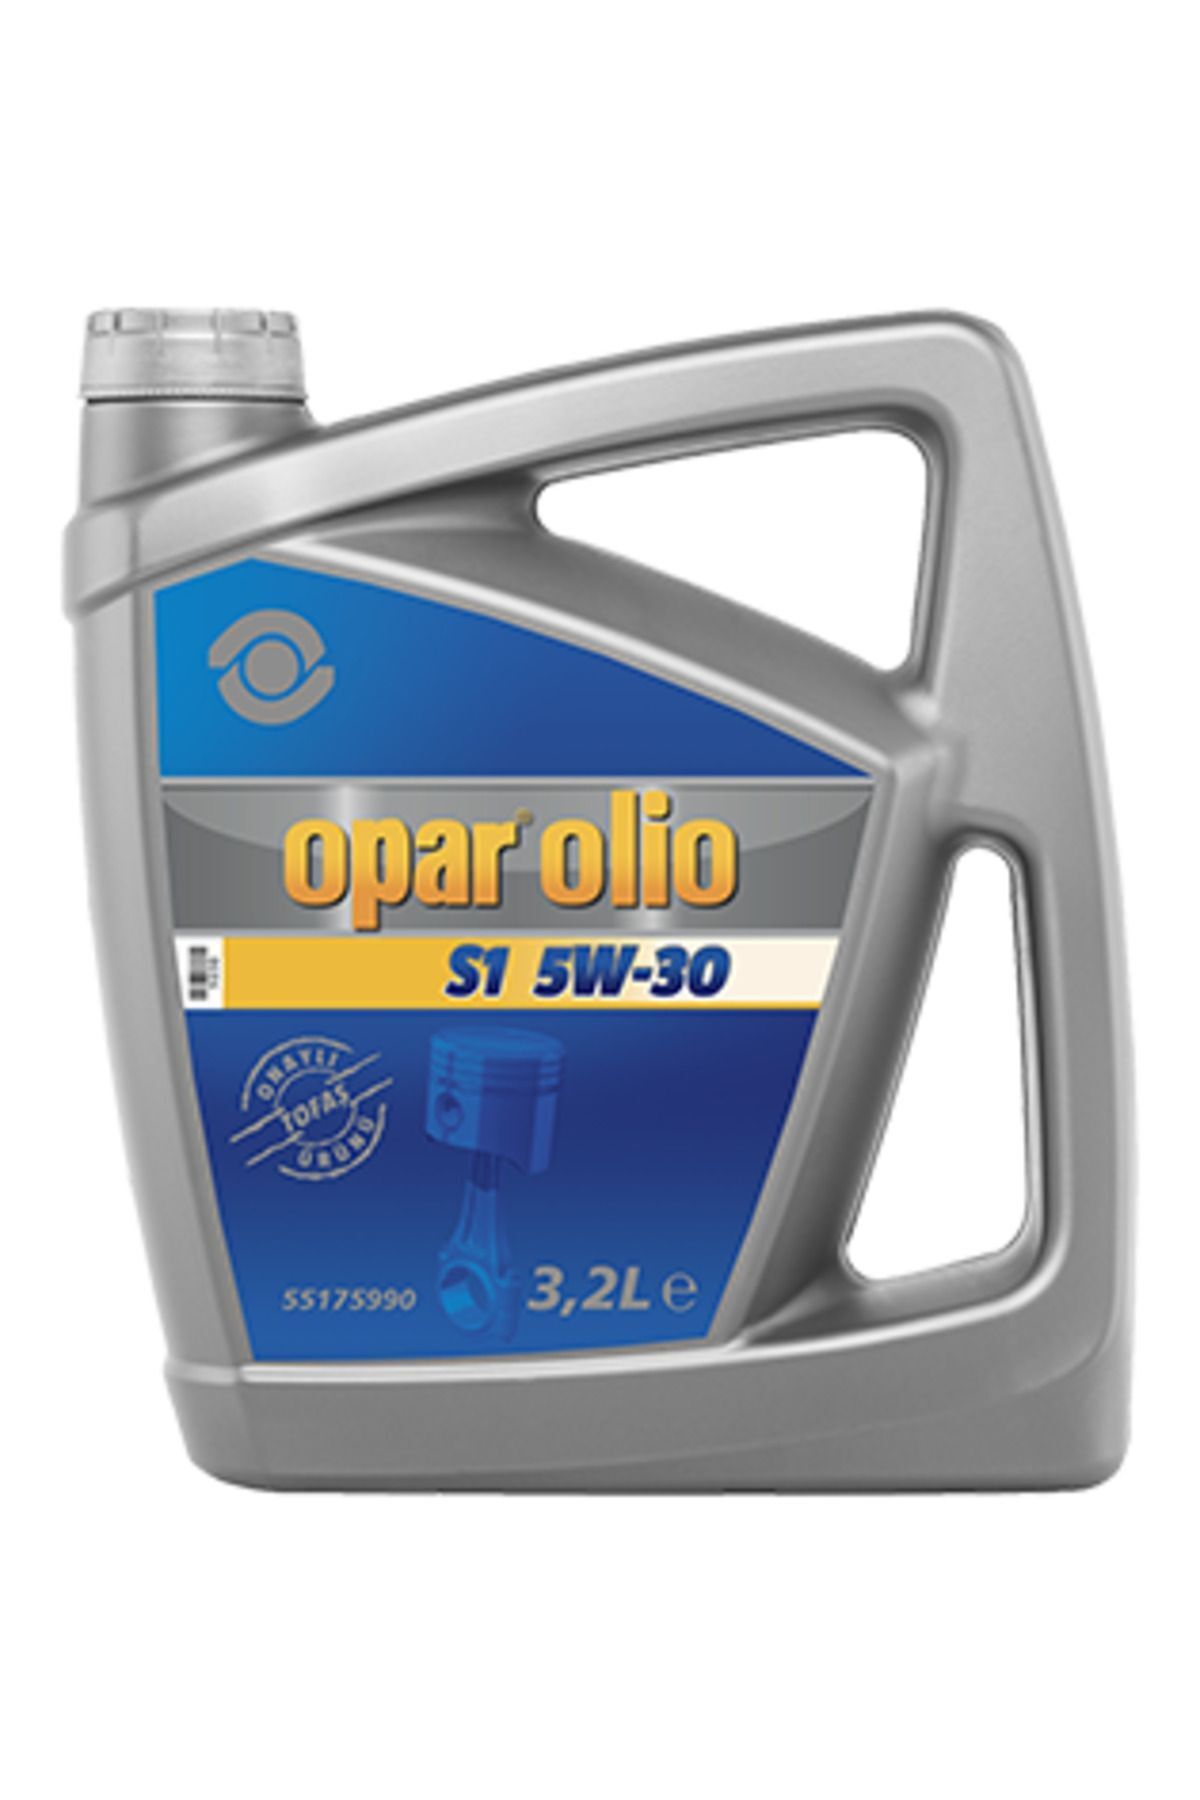 Opar Olio S1 5w-30 5/30 3.2 Litre Motor Yagi 55175990